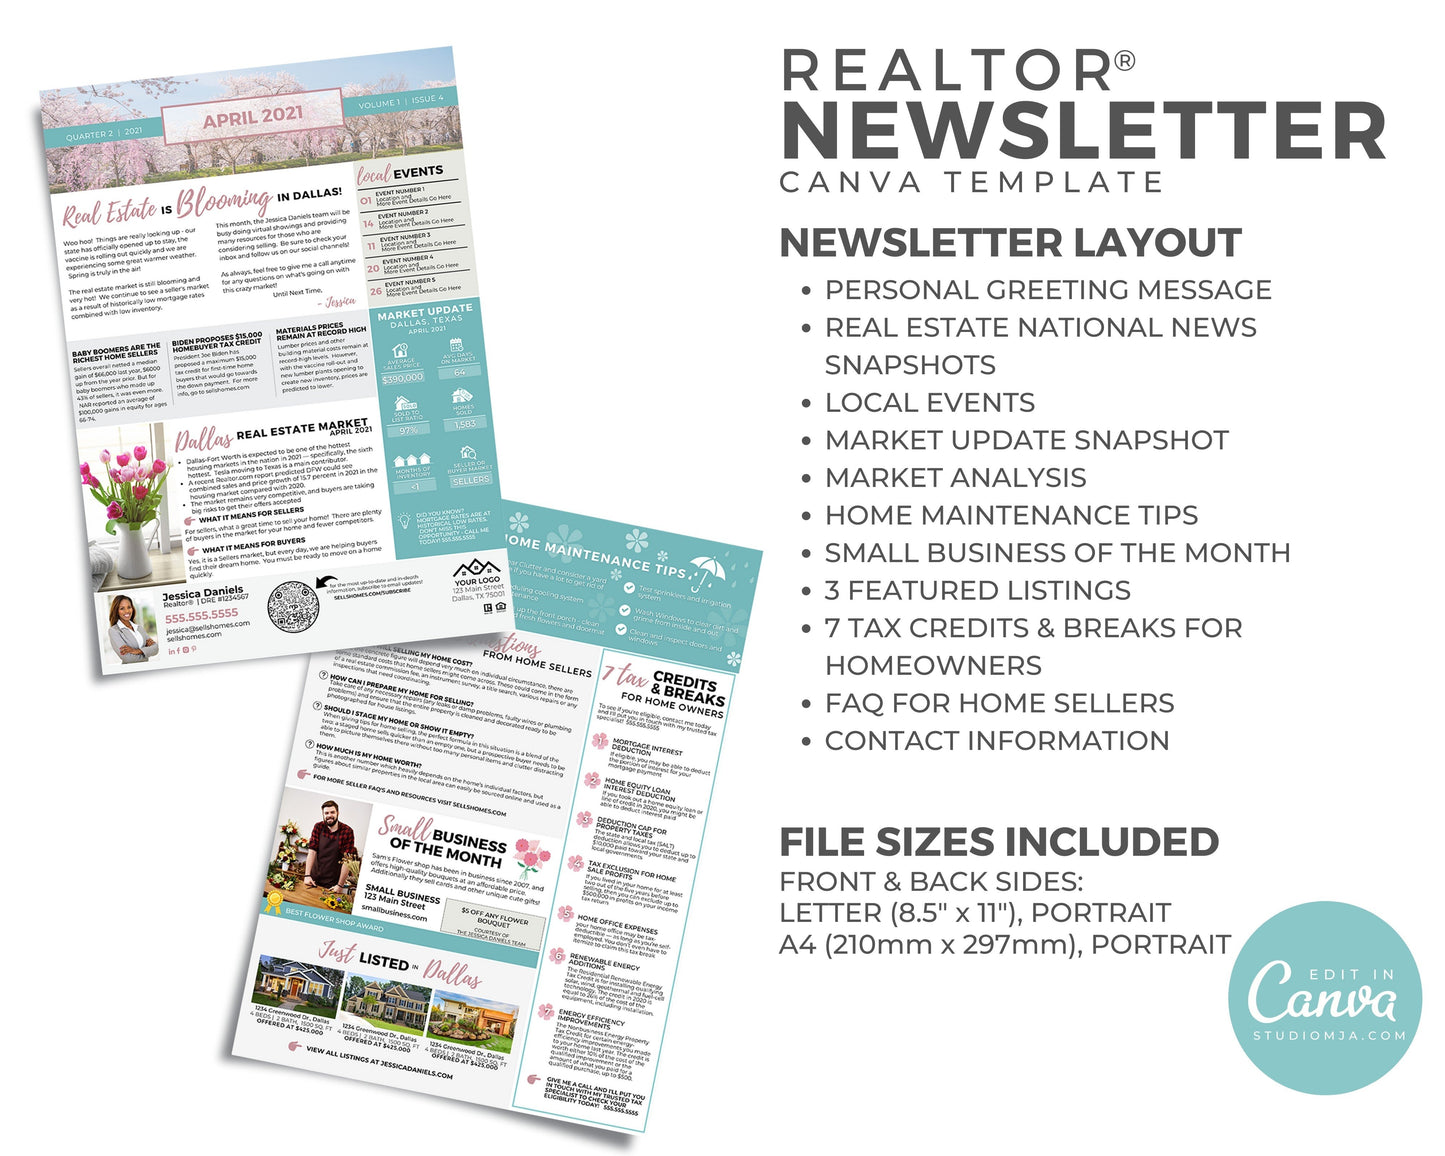 Realtor Newsletter Template - April